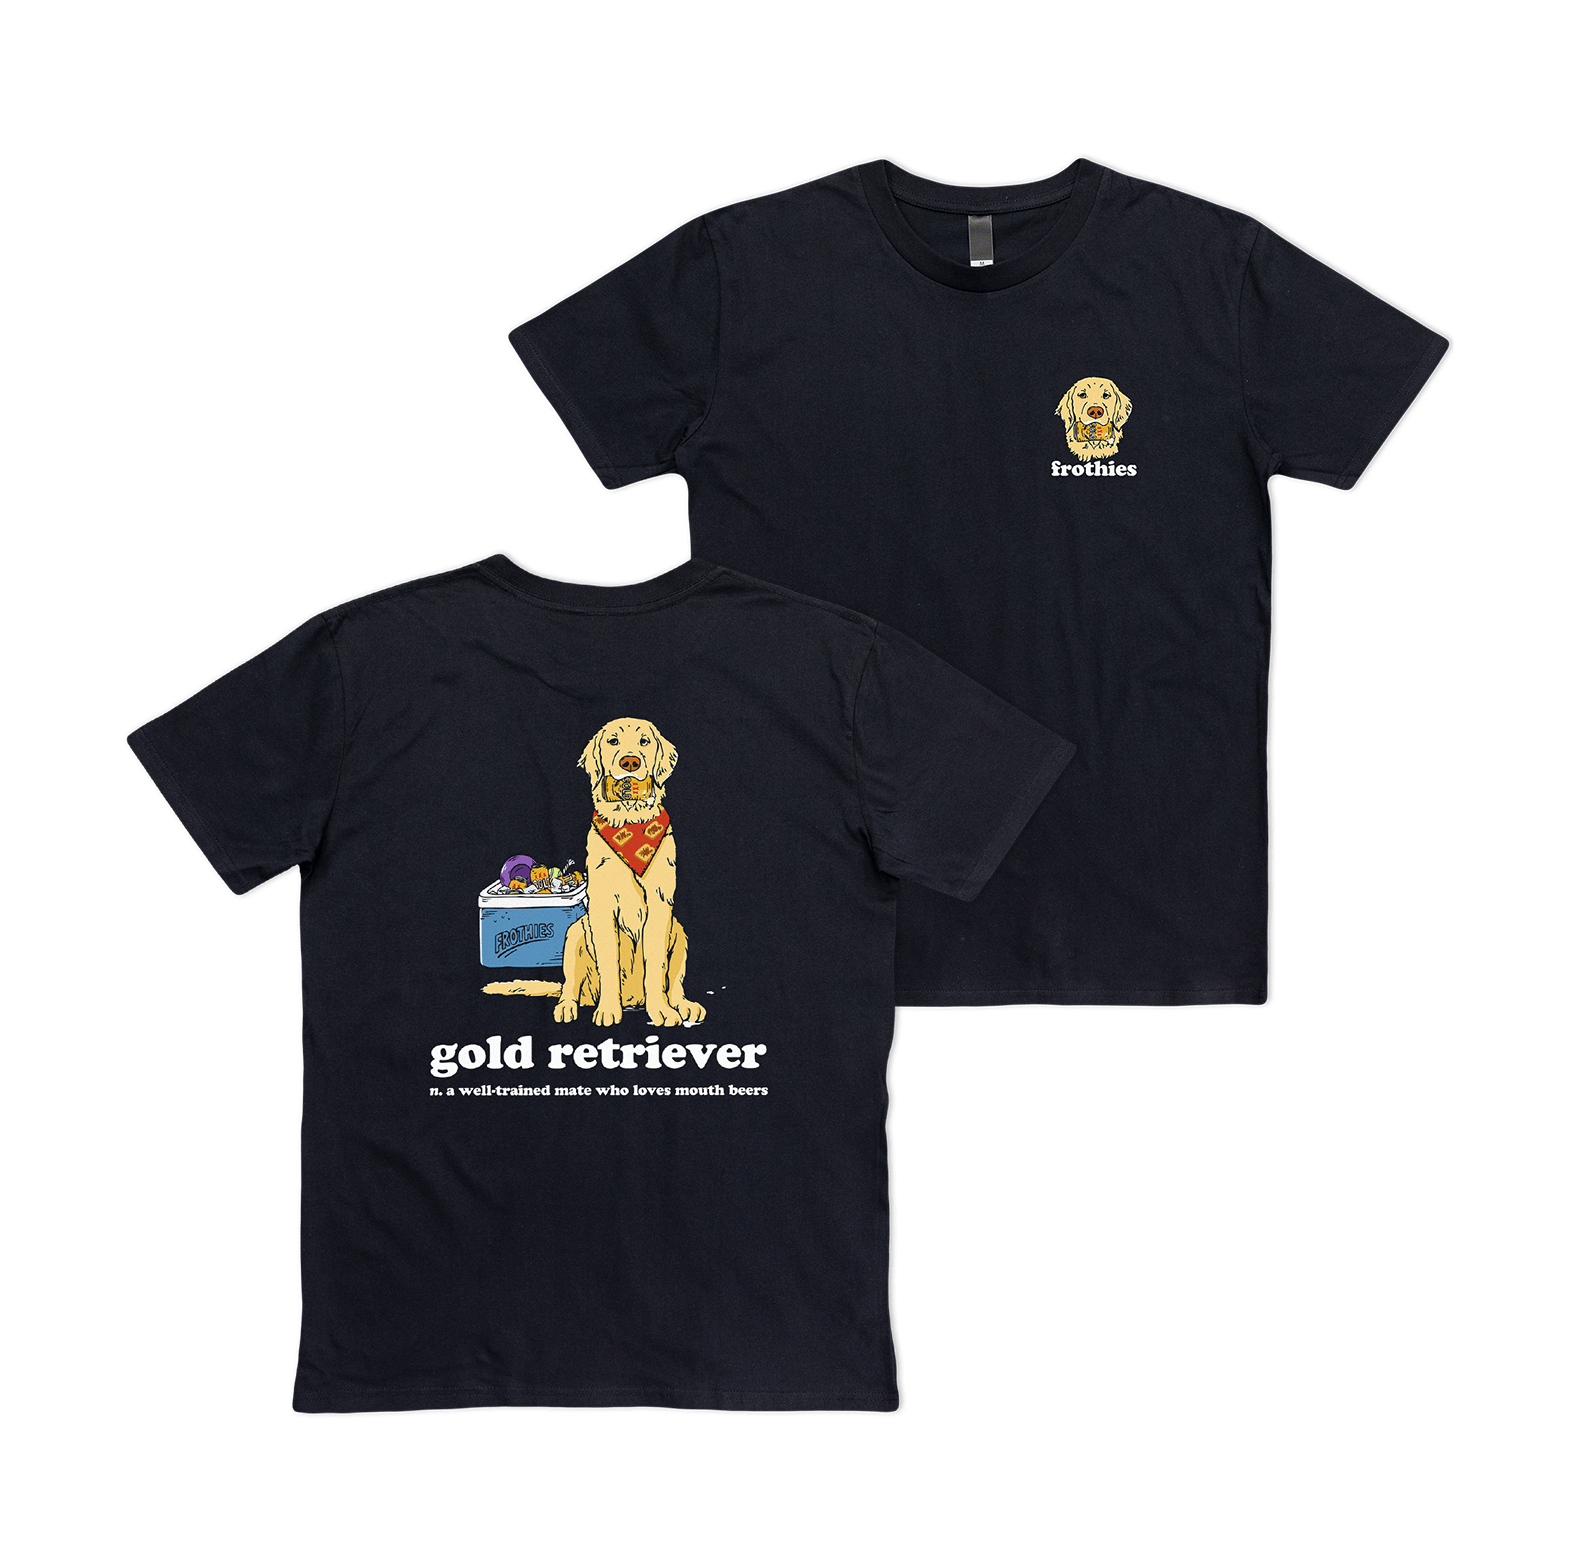 Gold Retriever Tee T-Shirt Frothies